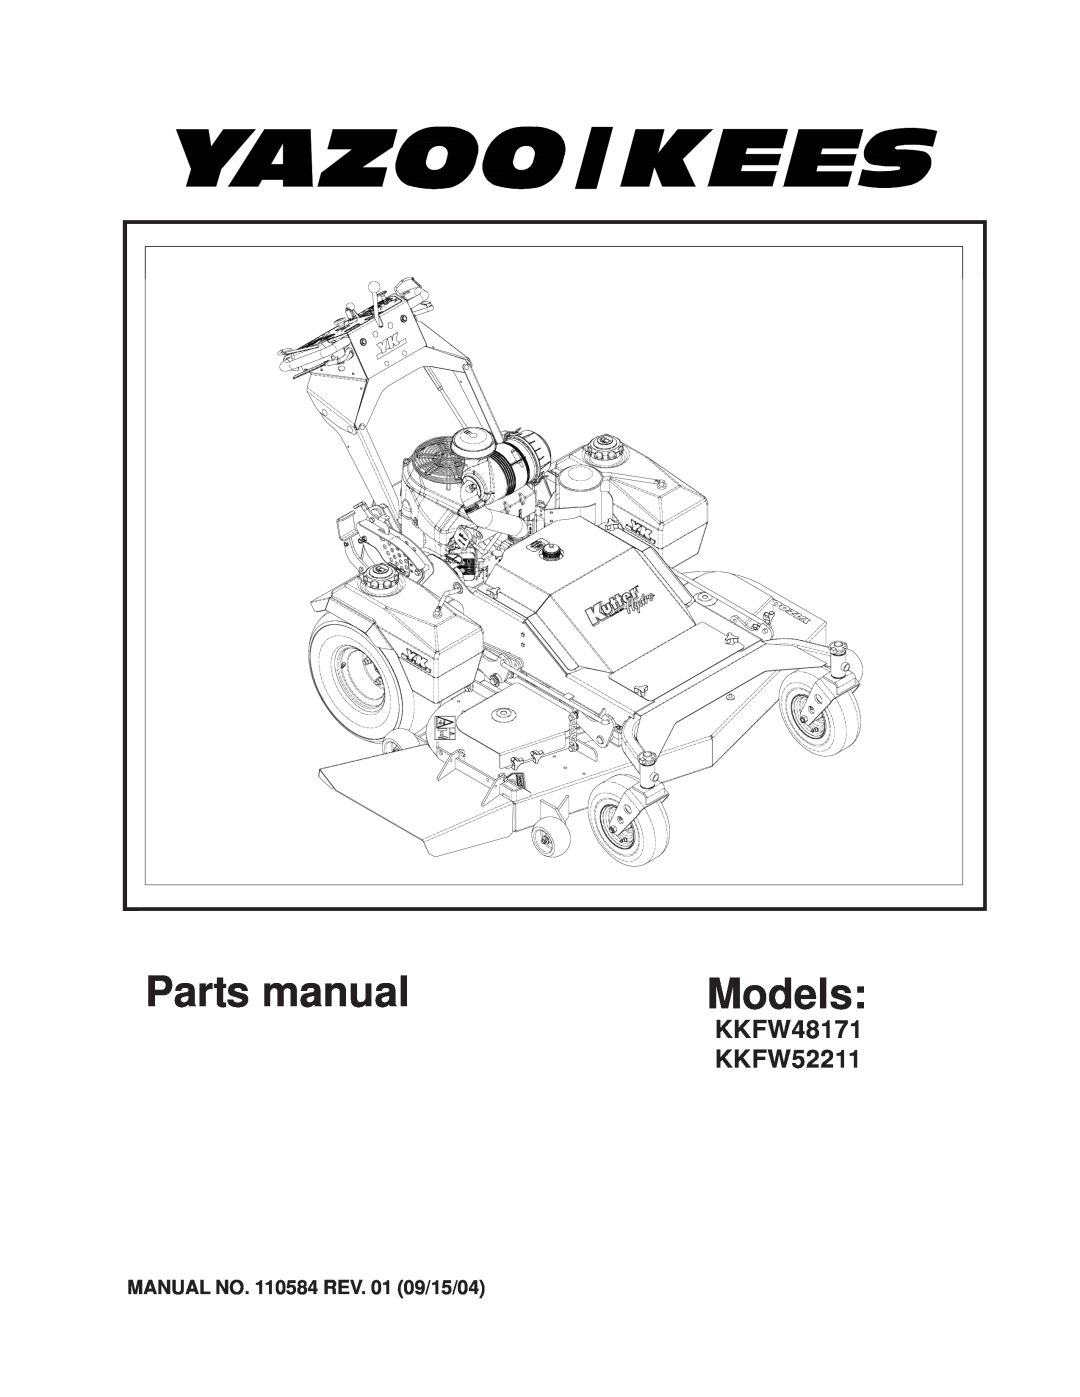 Yazoo/Kees KKFW48171 manual MANUAL NO. 110584 REV. 01 09/15/04, Parts manual, Models, KKFW52211 